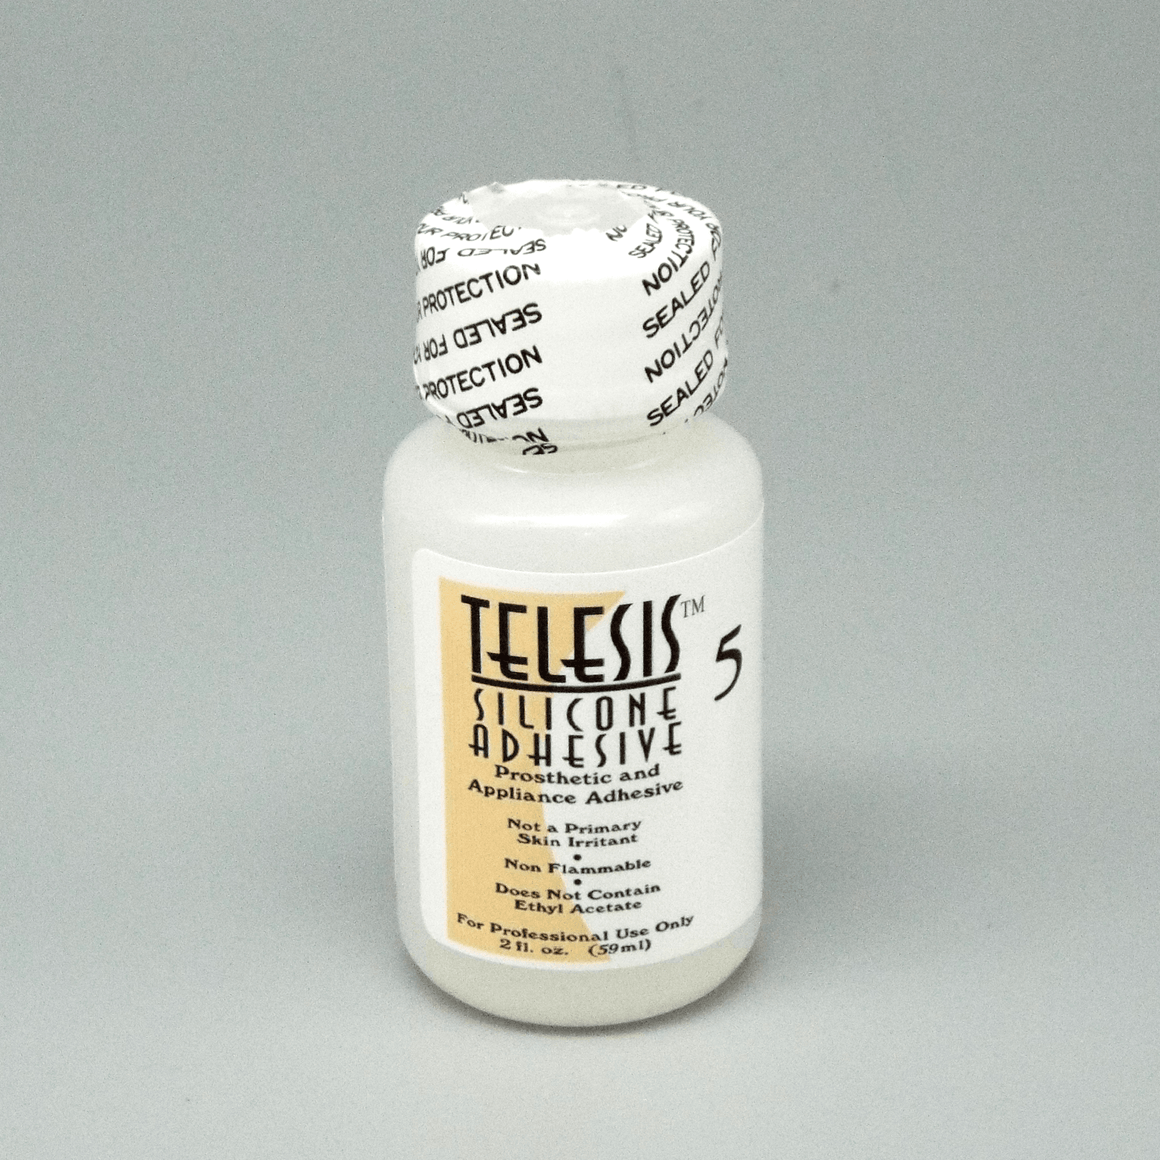 Adhesive/Solvent - Telesis 5 Silicone Adhesive